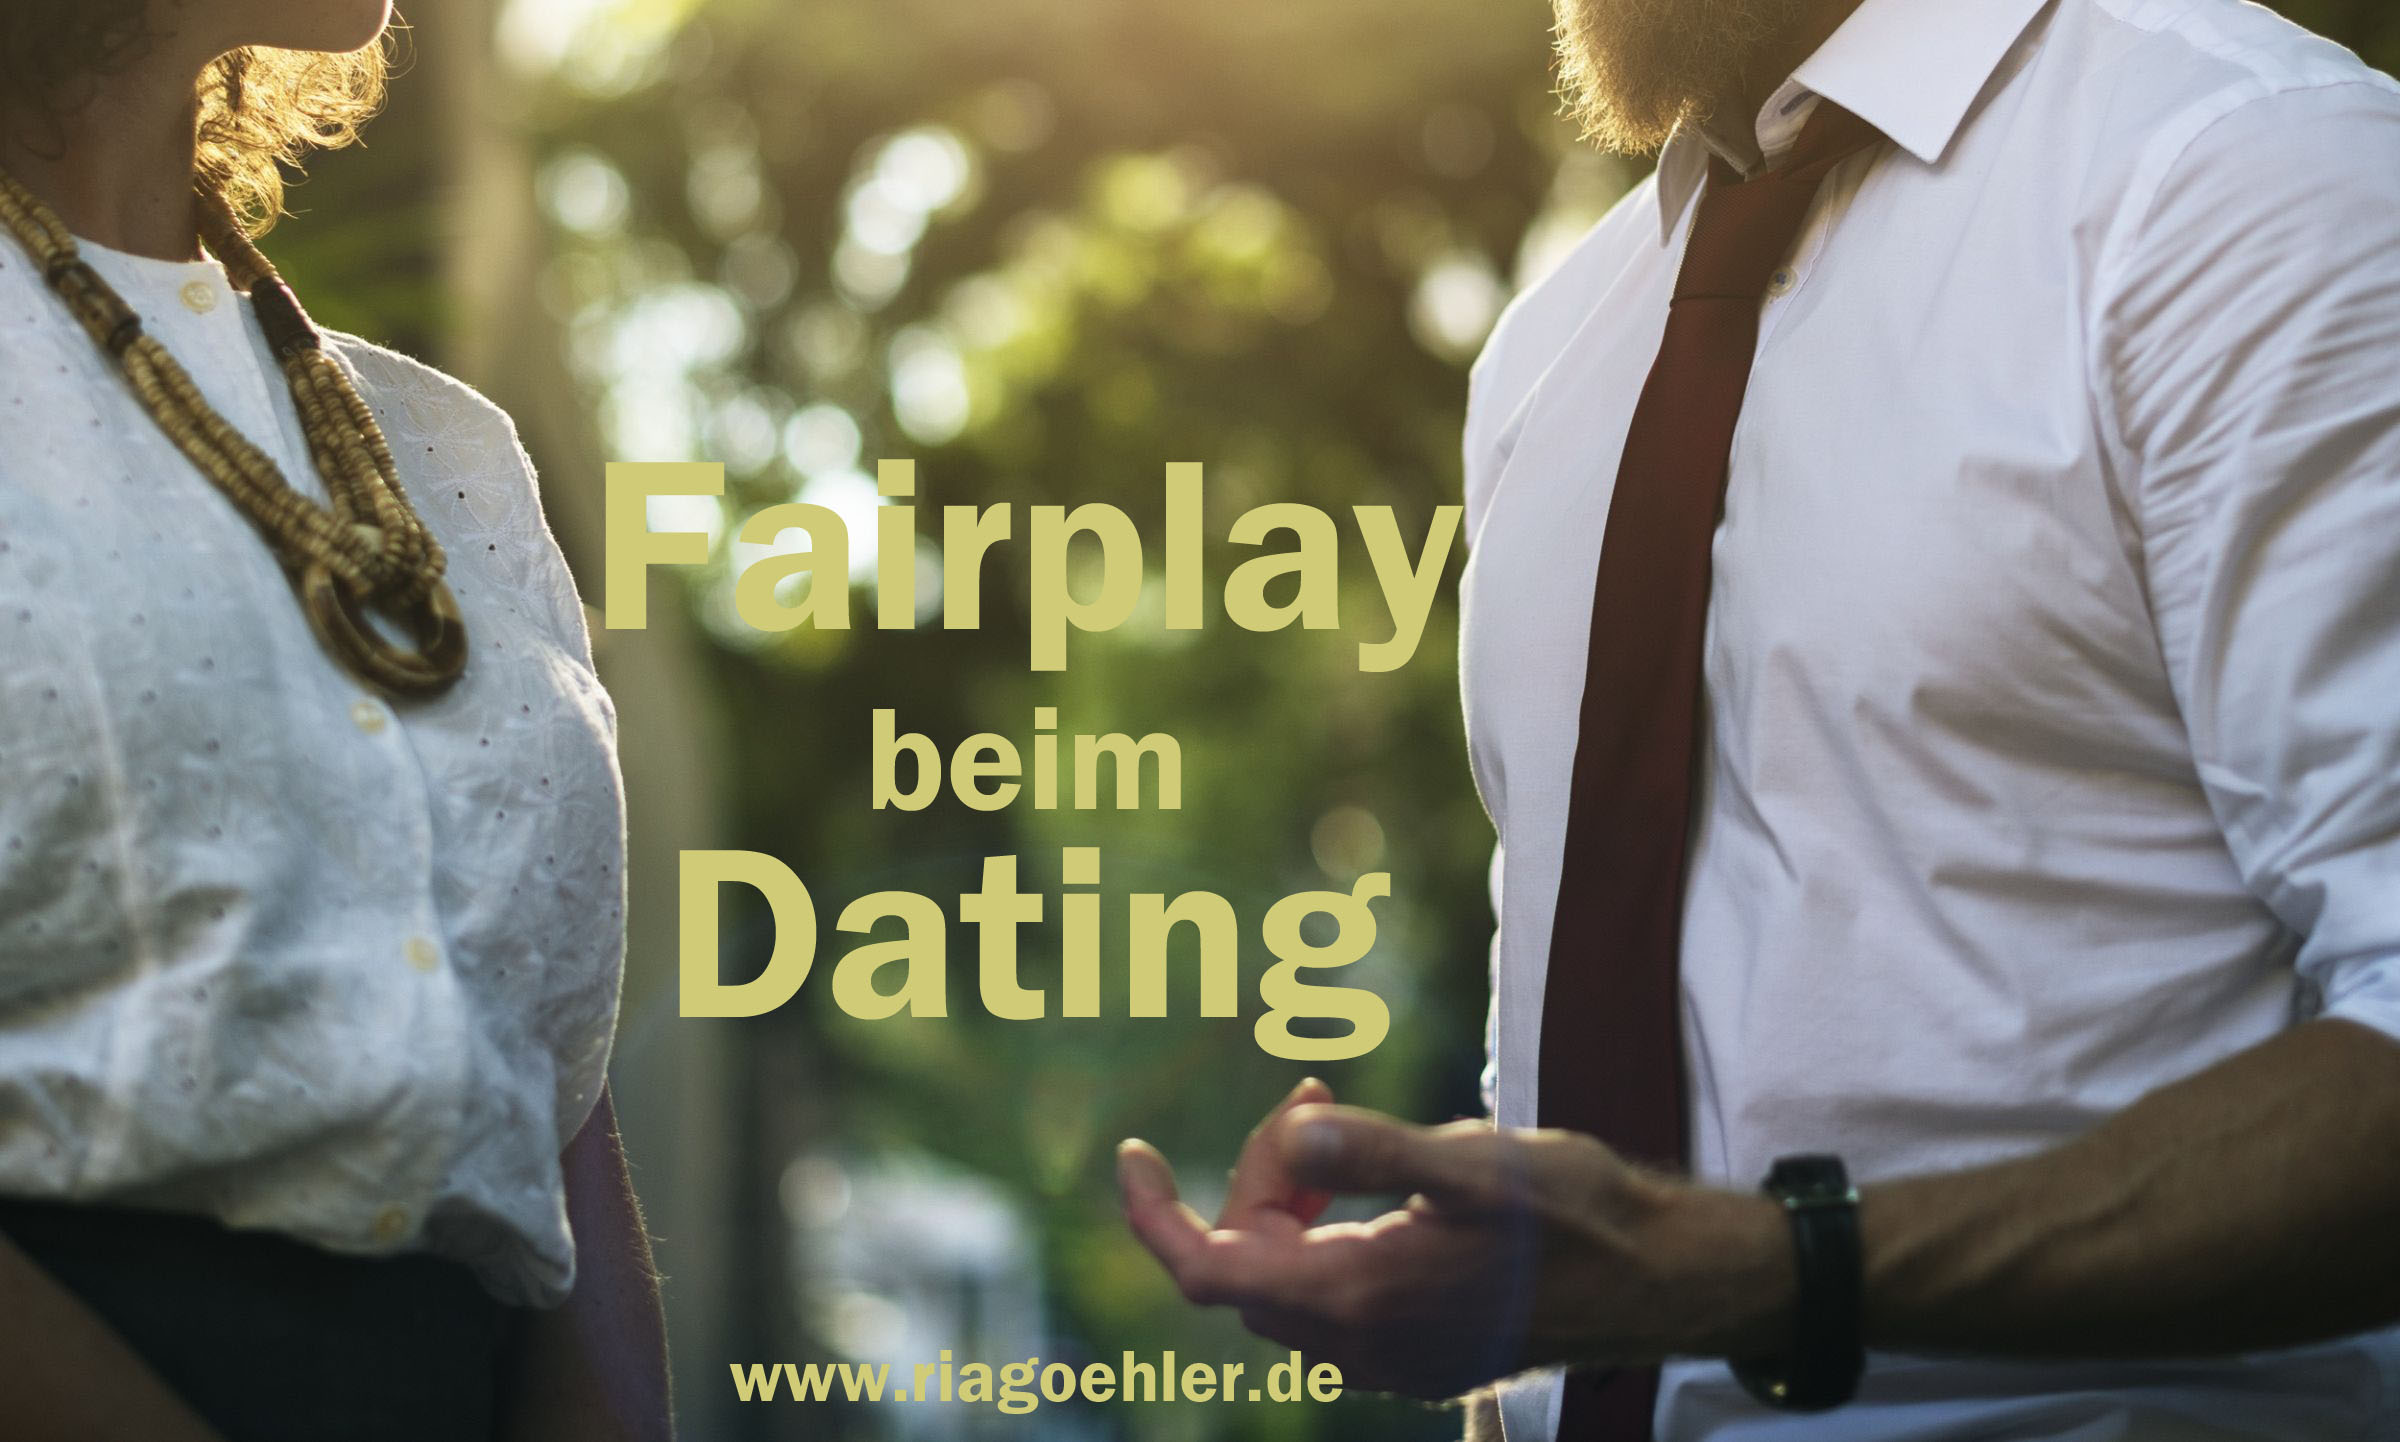 Über 50 dating coach